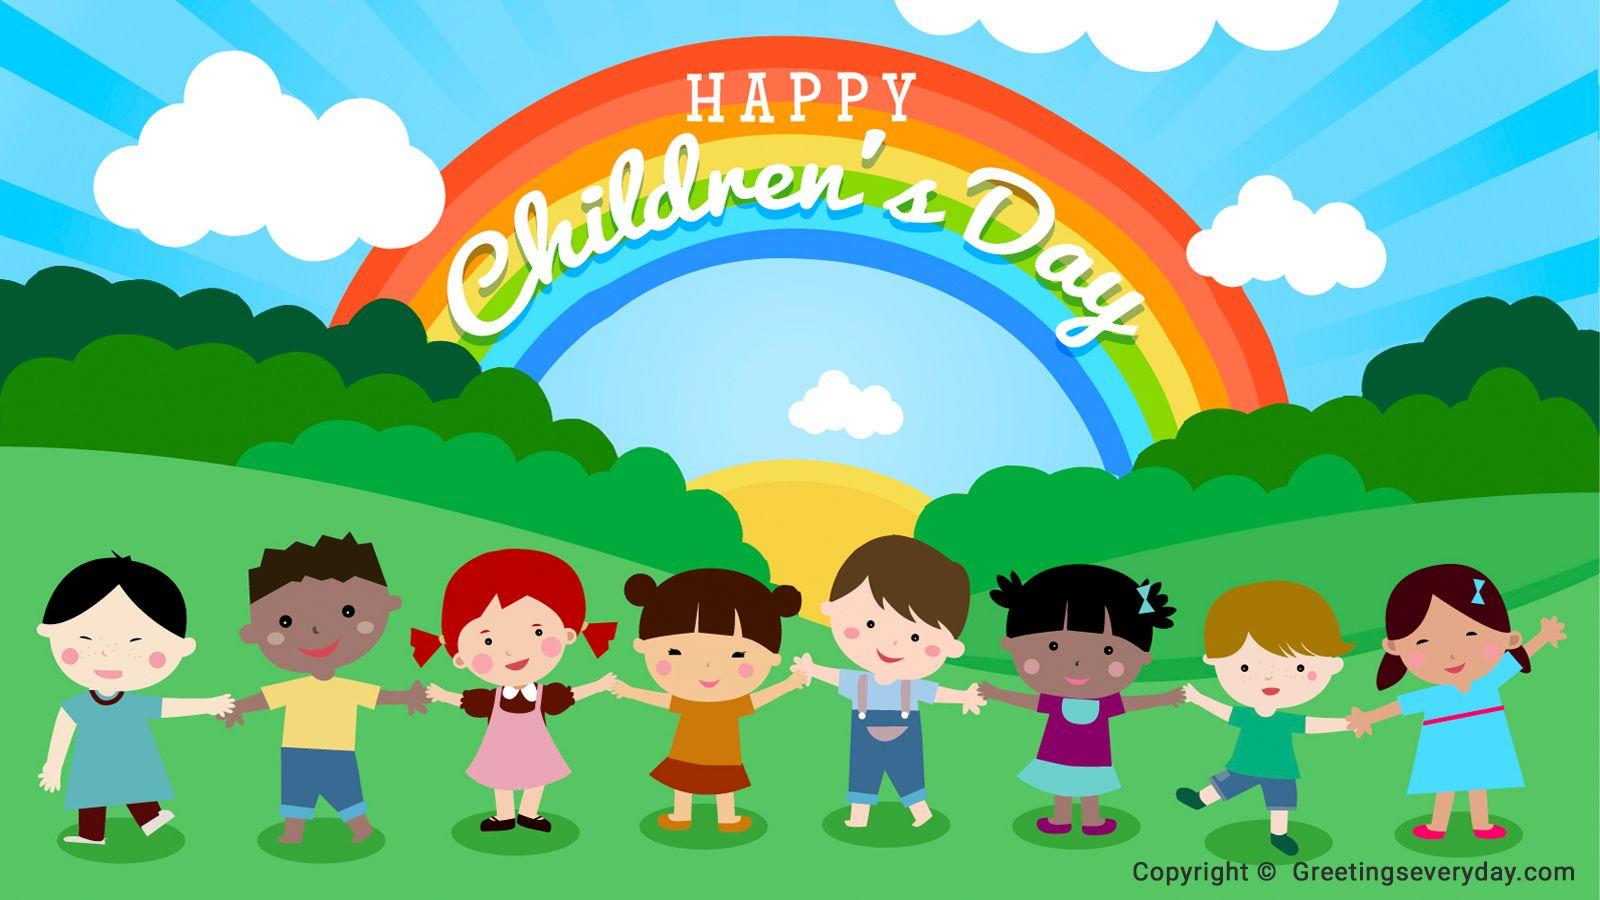 Best}* Happy Children's Day 2017 HD Wallpaper, Image